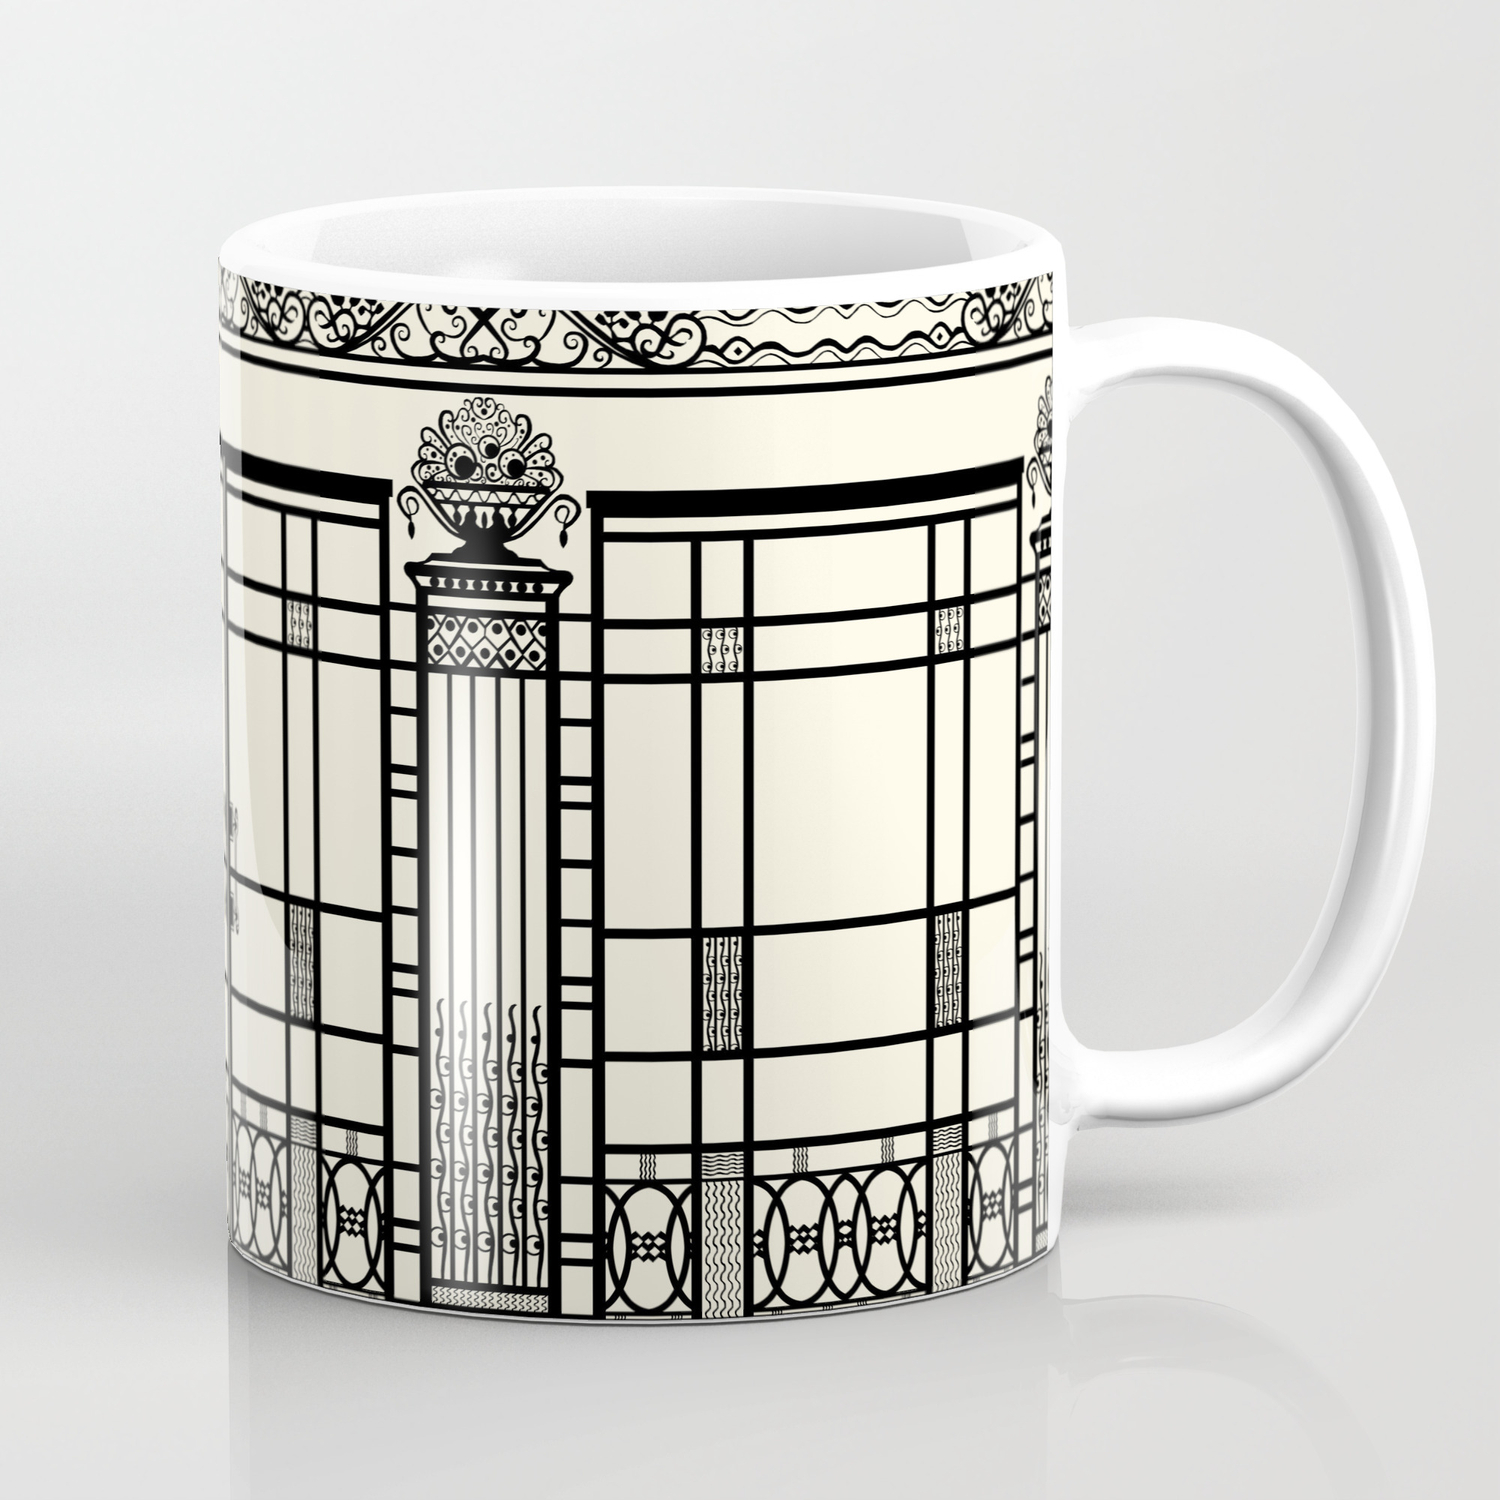 Art Nouveau inspired mug